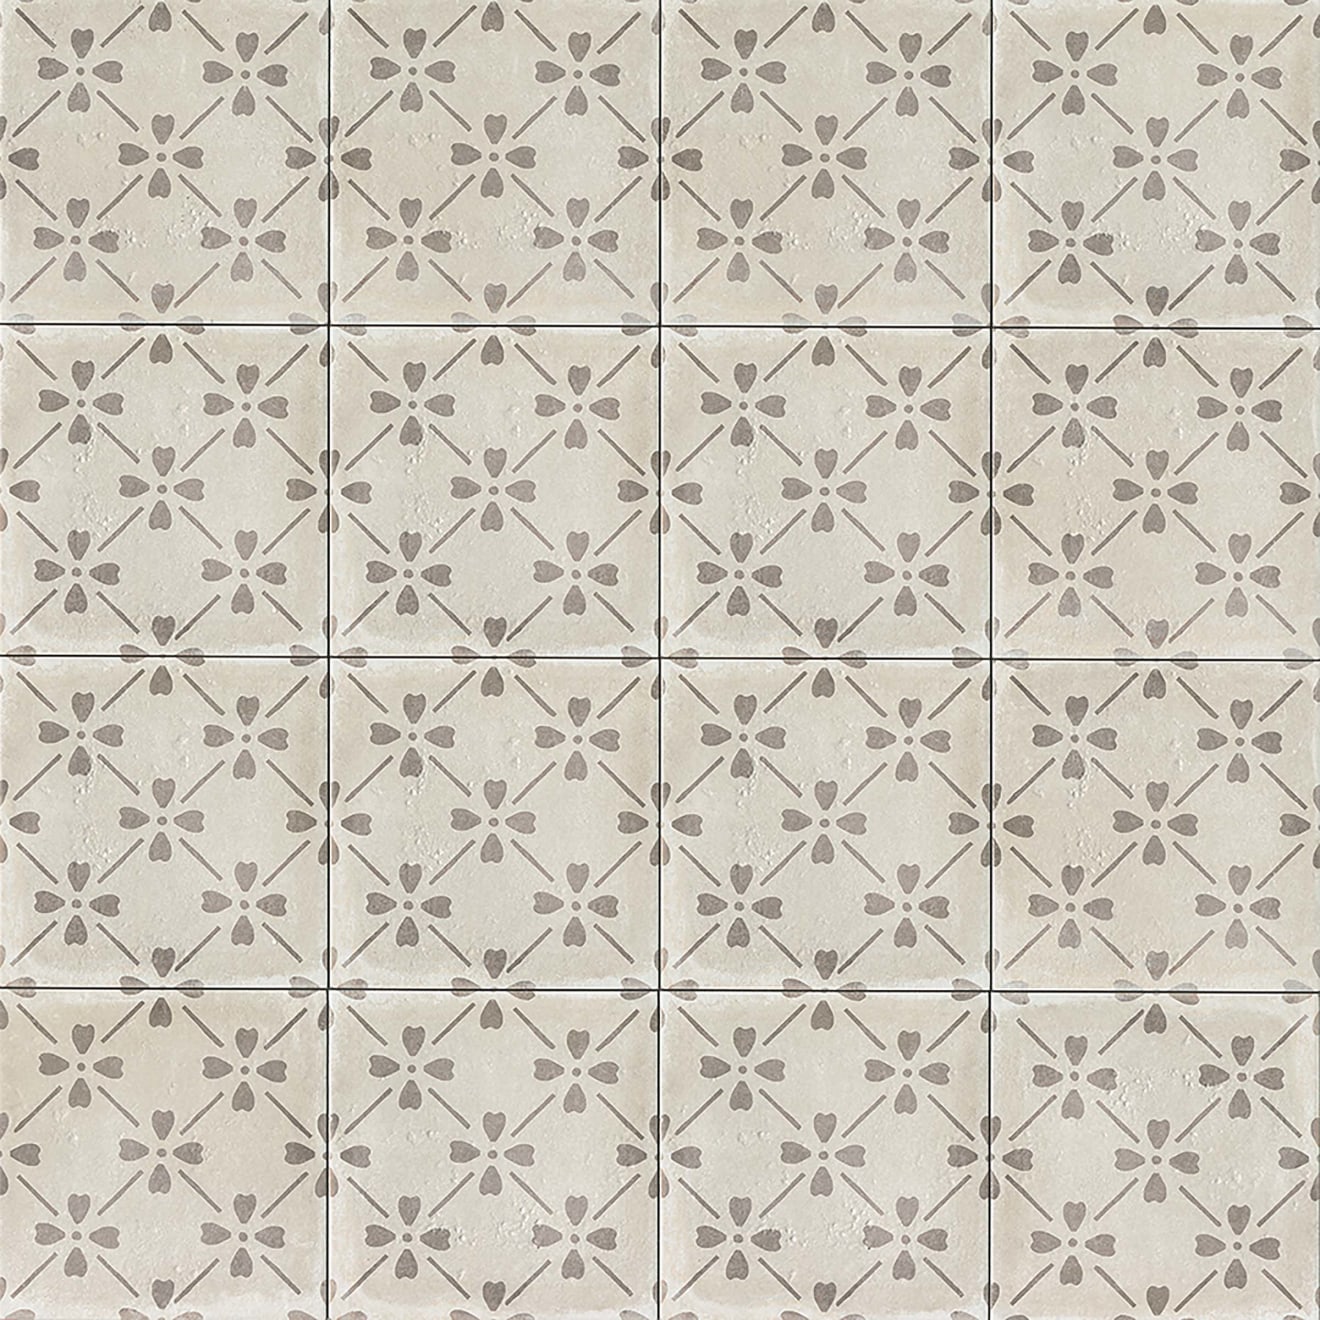 Palazzo 12" x 12" Decorative Tile in Vintage Grey Bloom | Bedrosians Tile & Stone